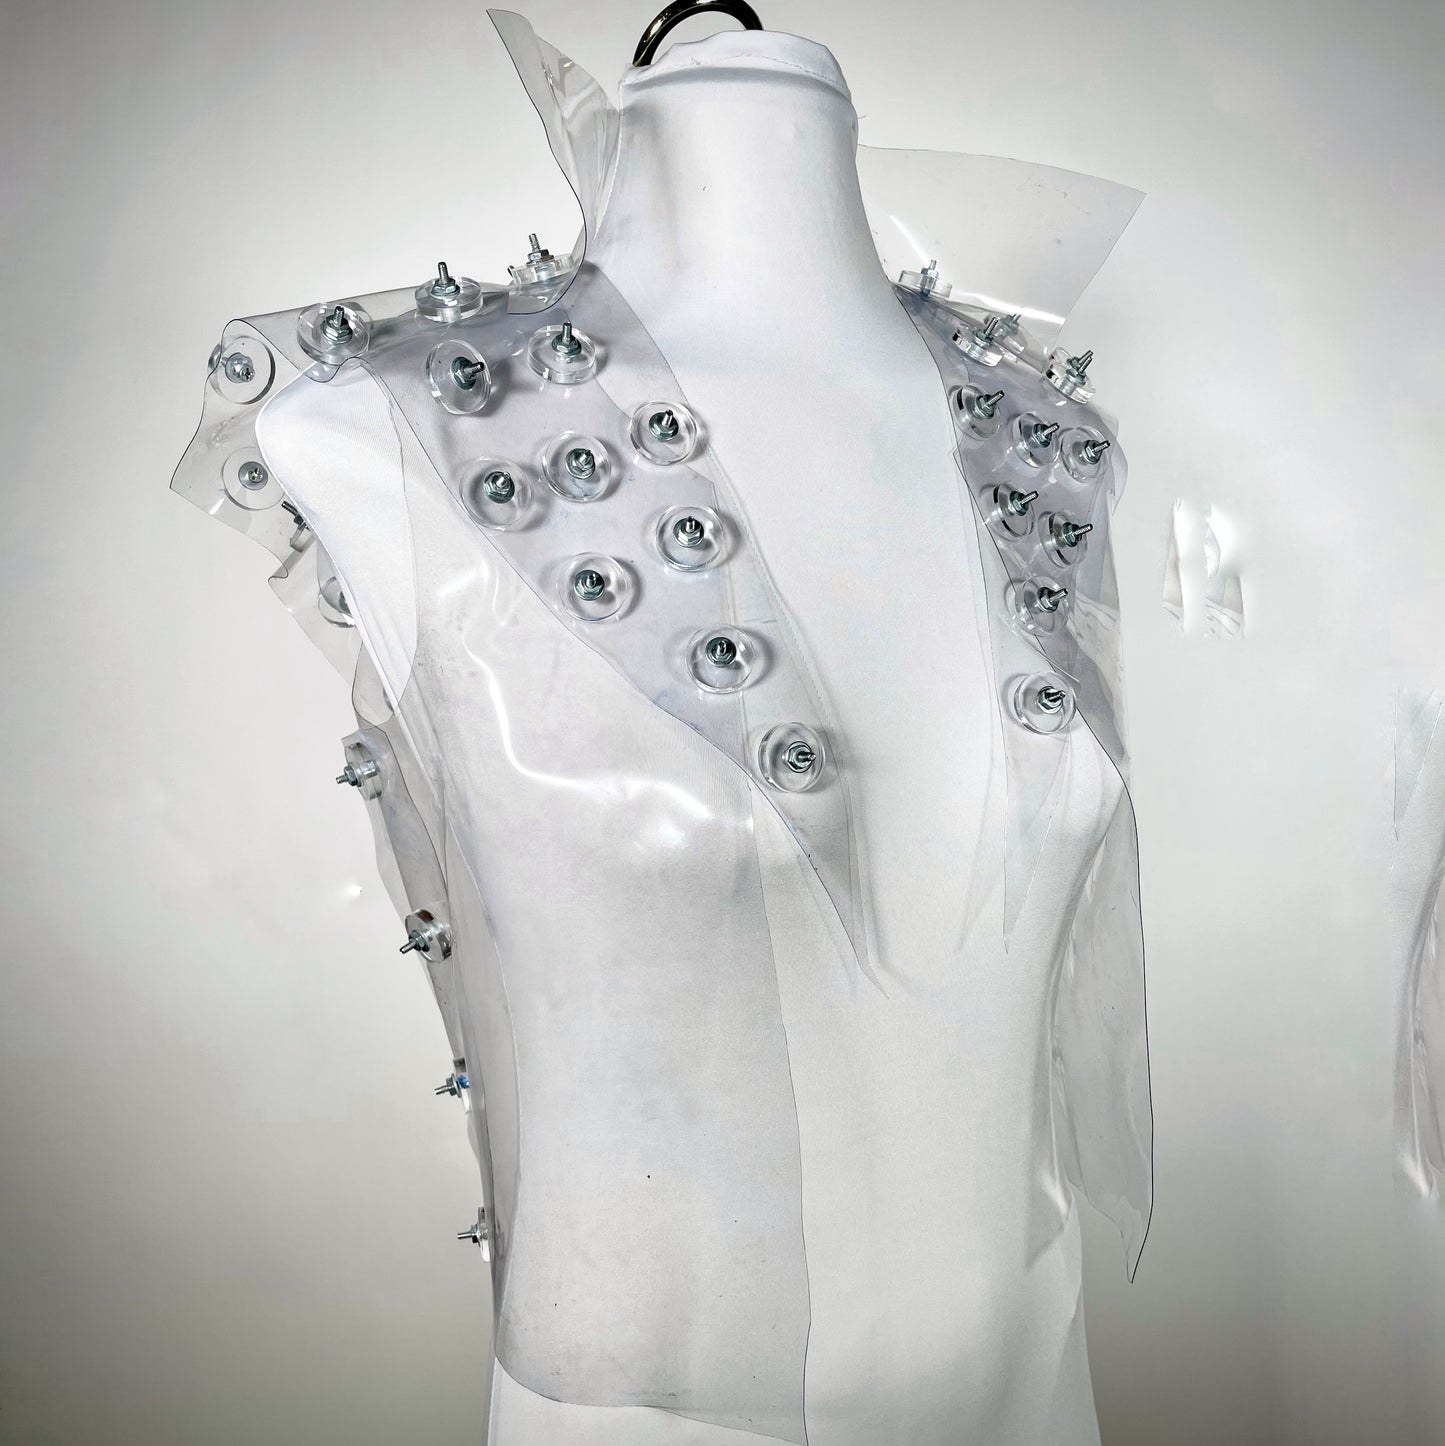 Plastic and Metal Futuristic Cyberpunk Vest